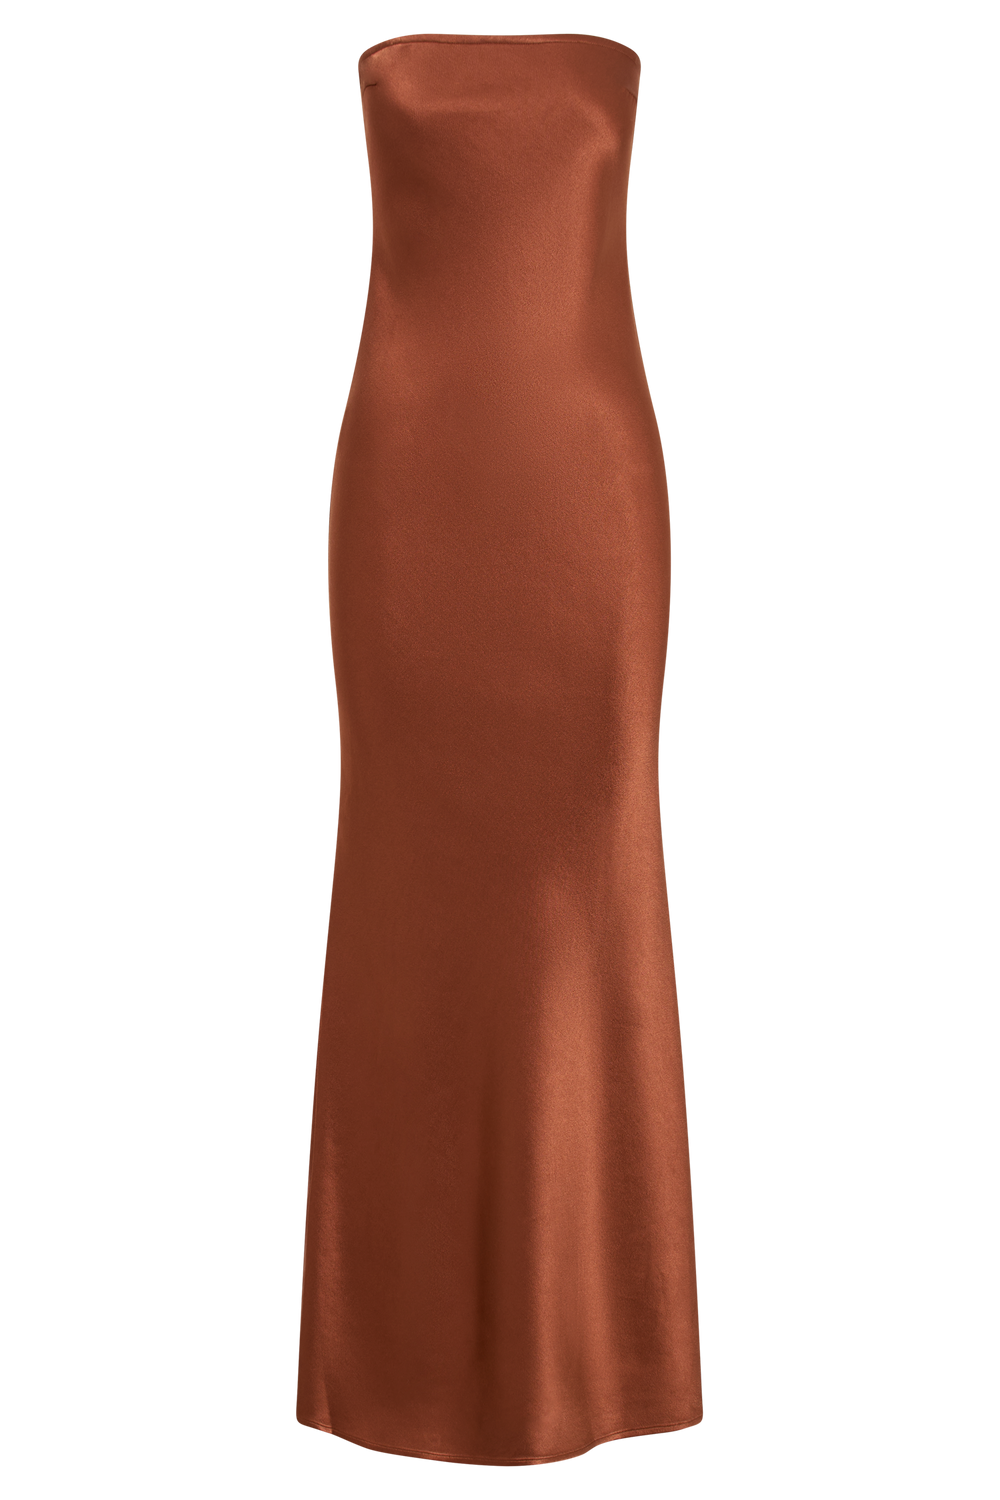 Claudette Strapless Satin Maxi Dress - Burnt Orange